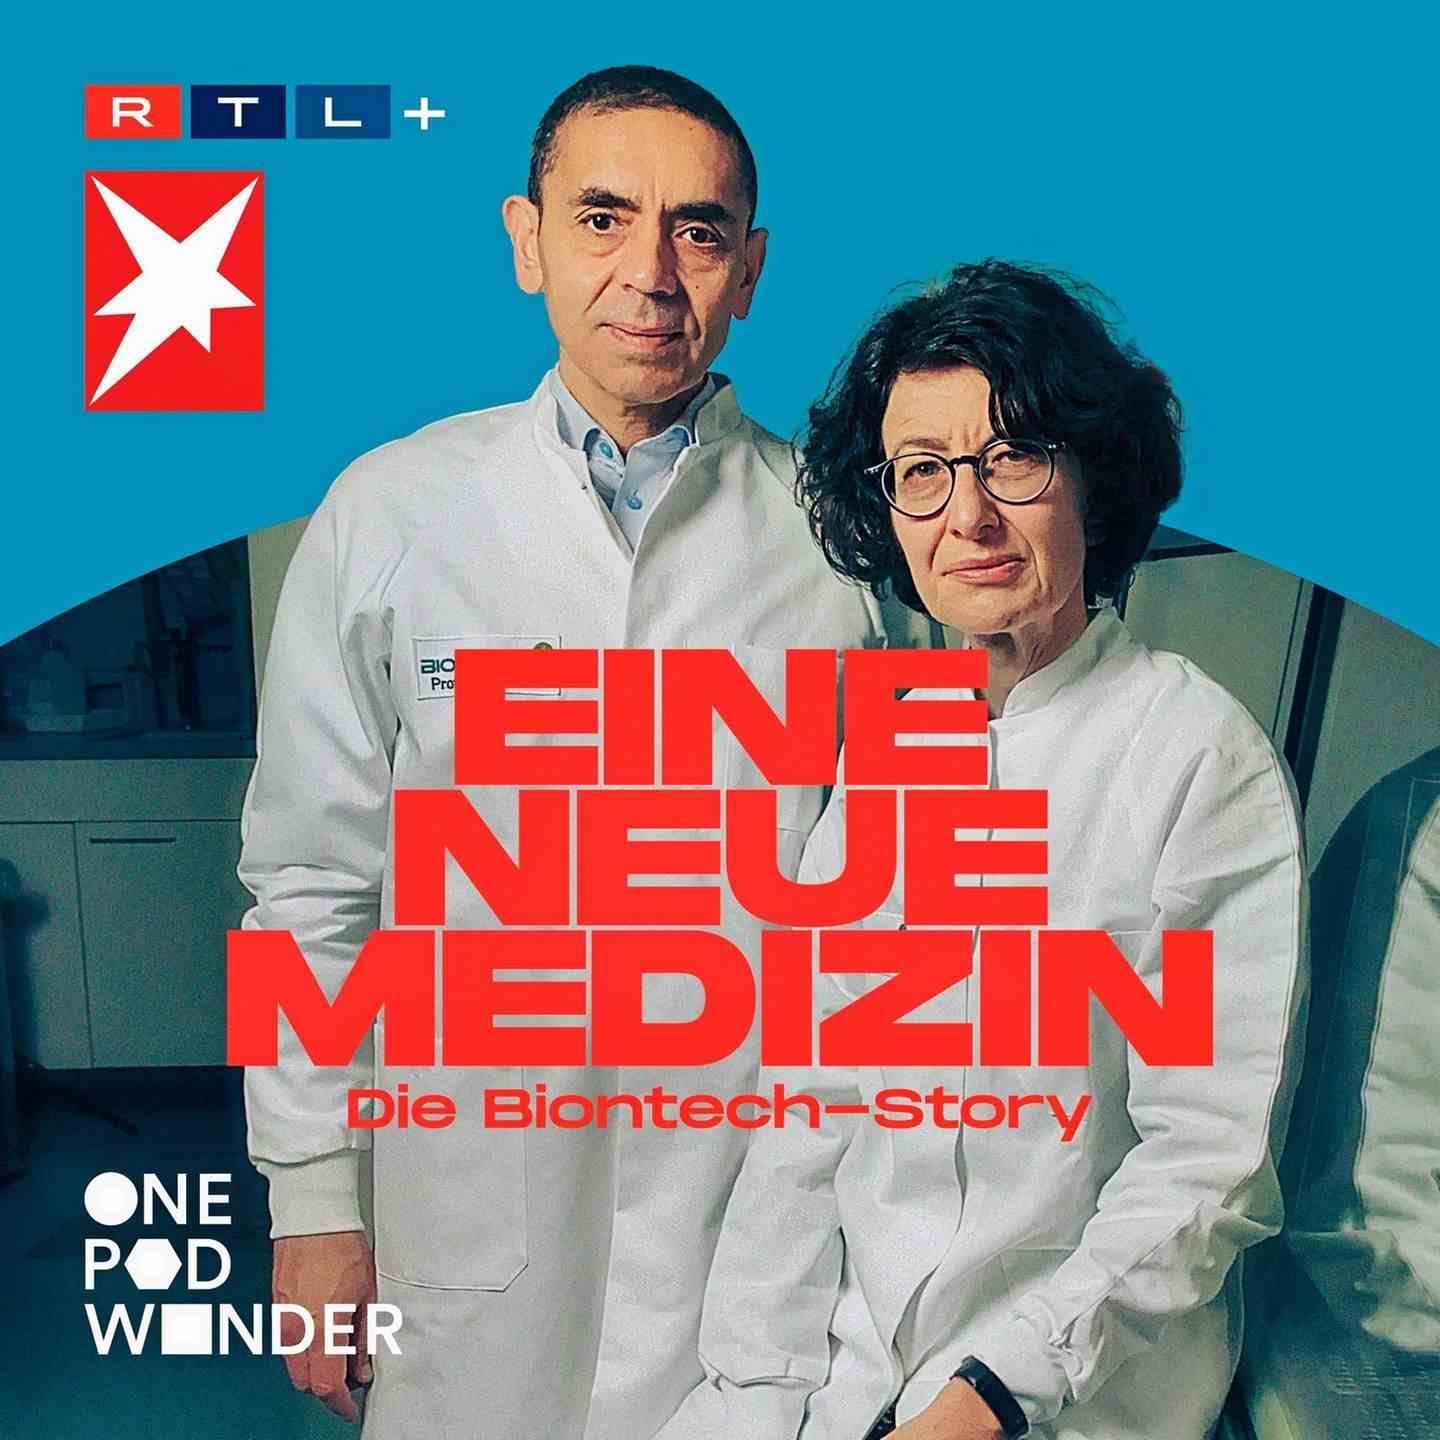 Biontech founders Özlem Türeci and Ugur Sahin podcast tile